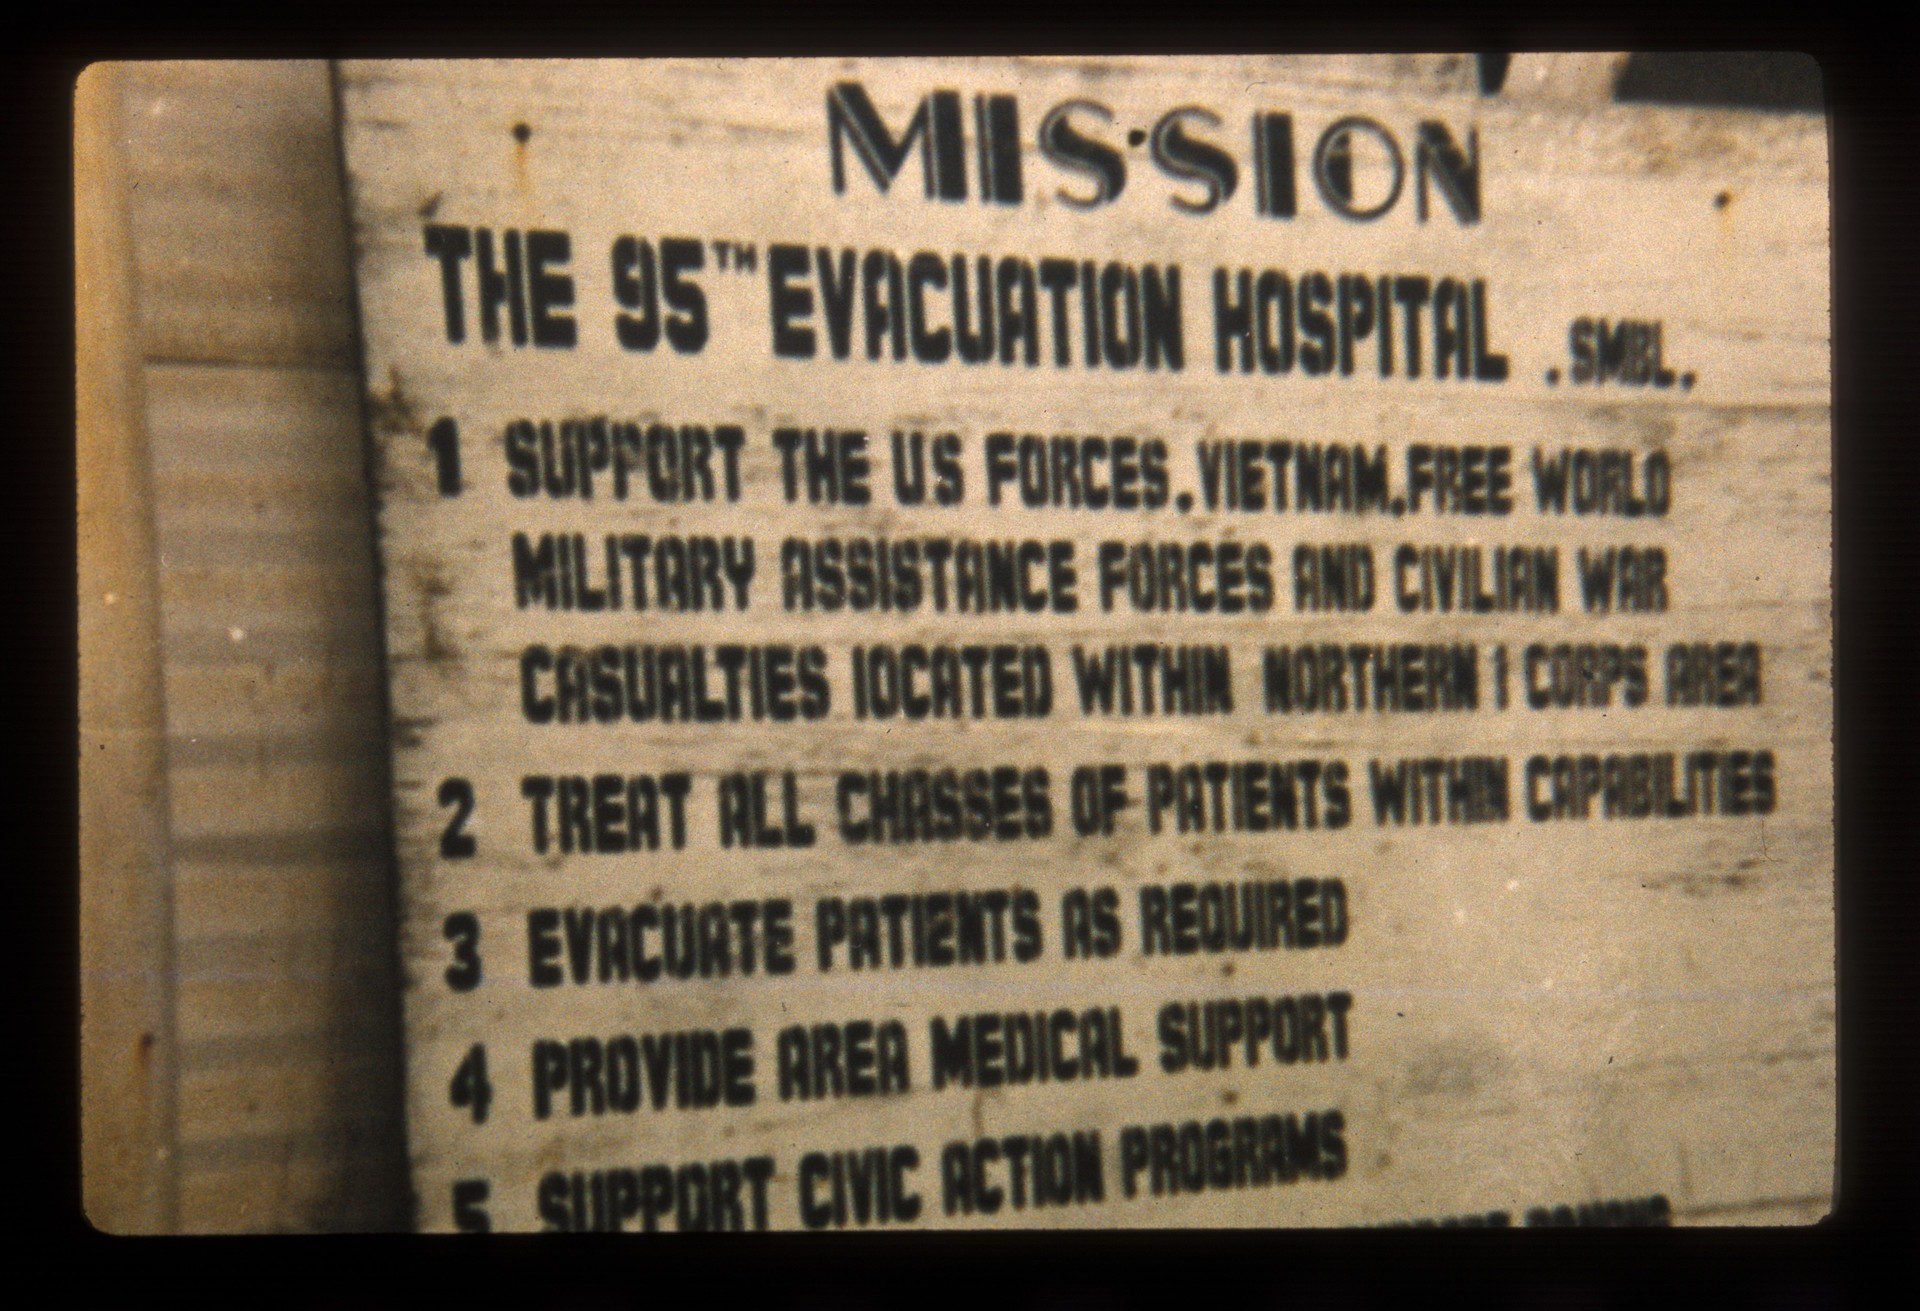 95th Evacuation Hospital